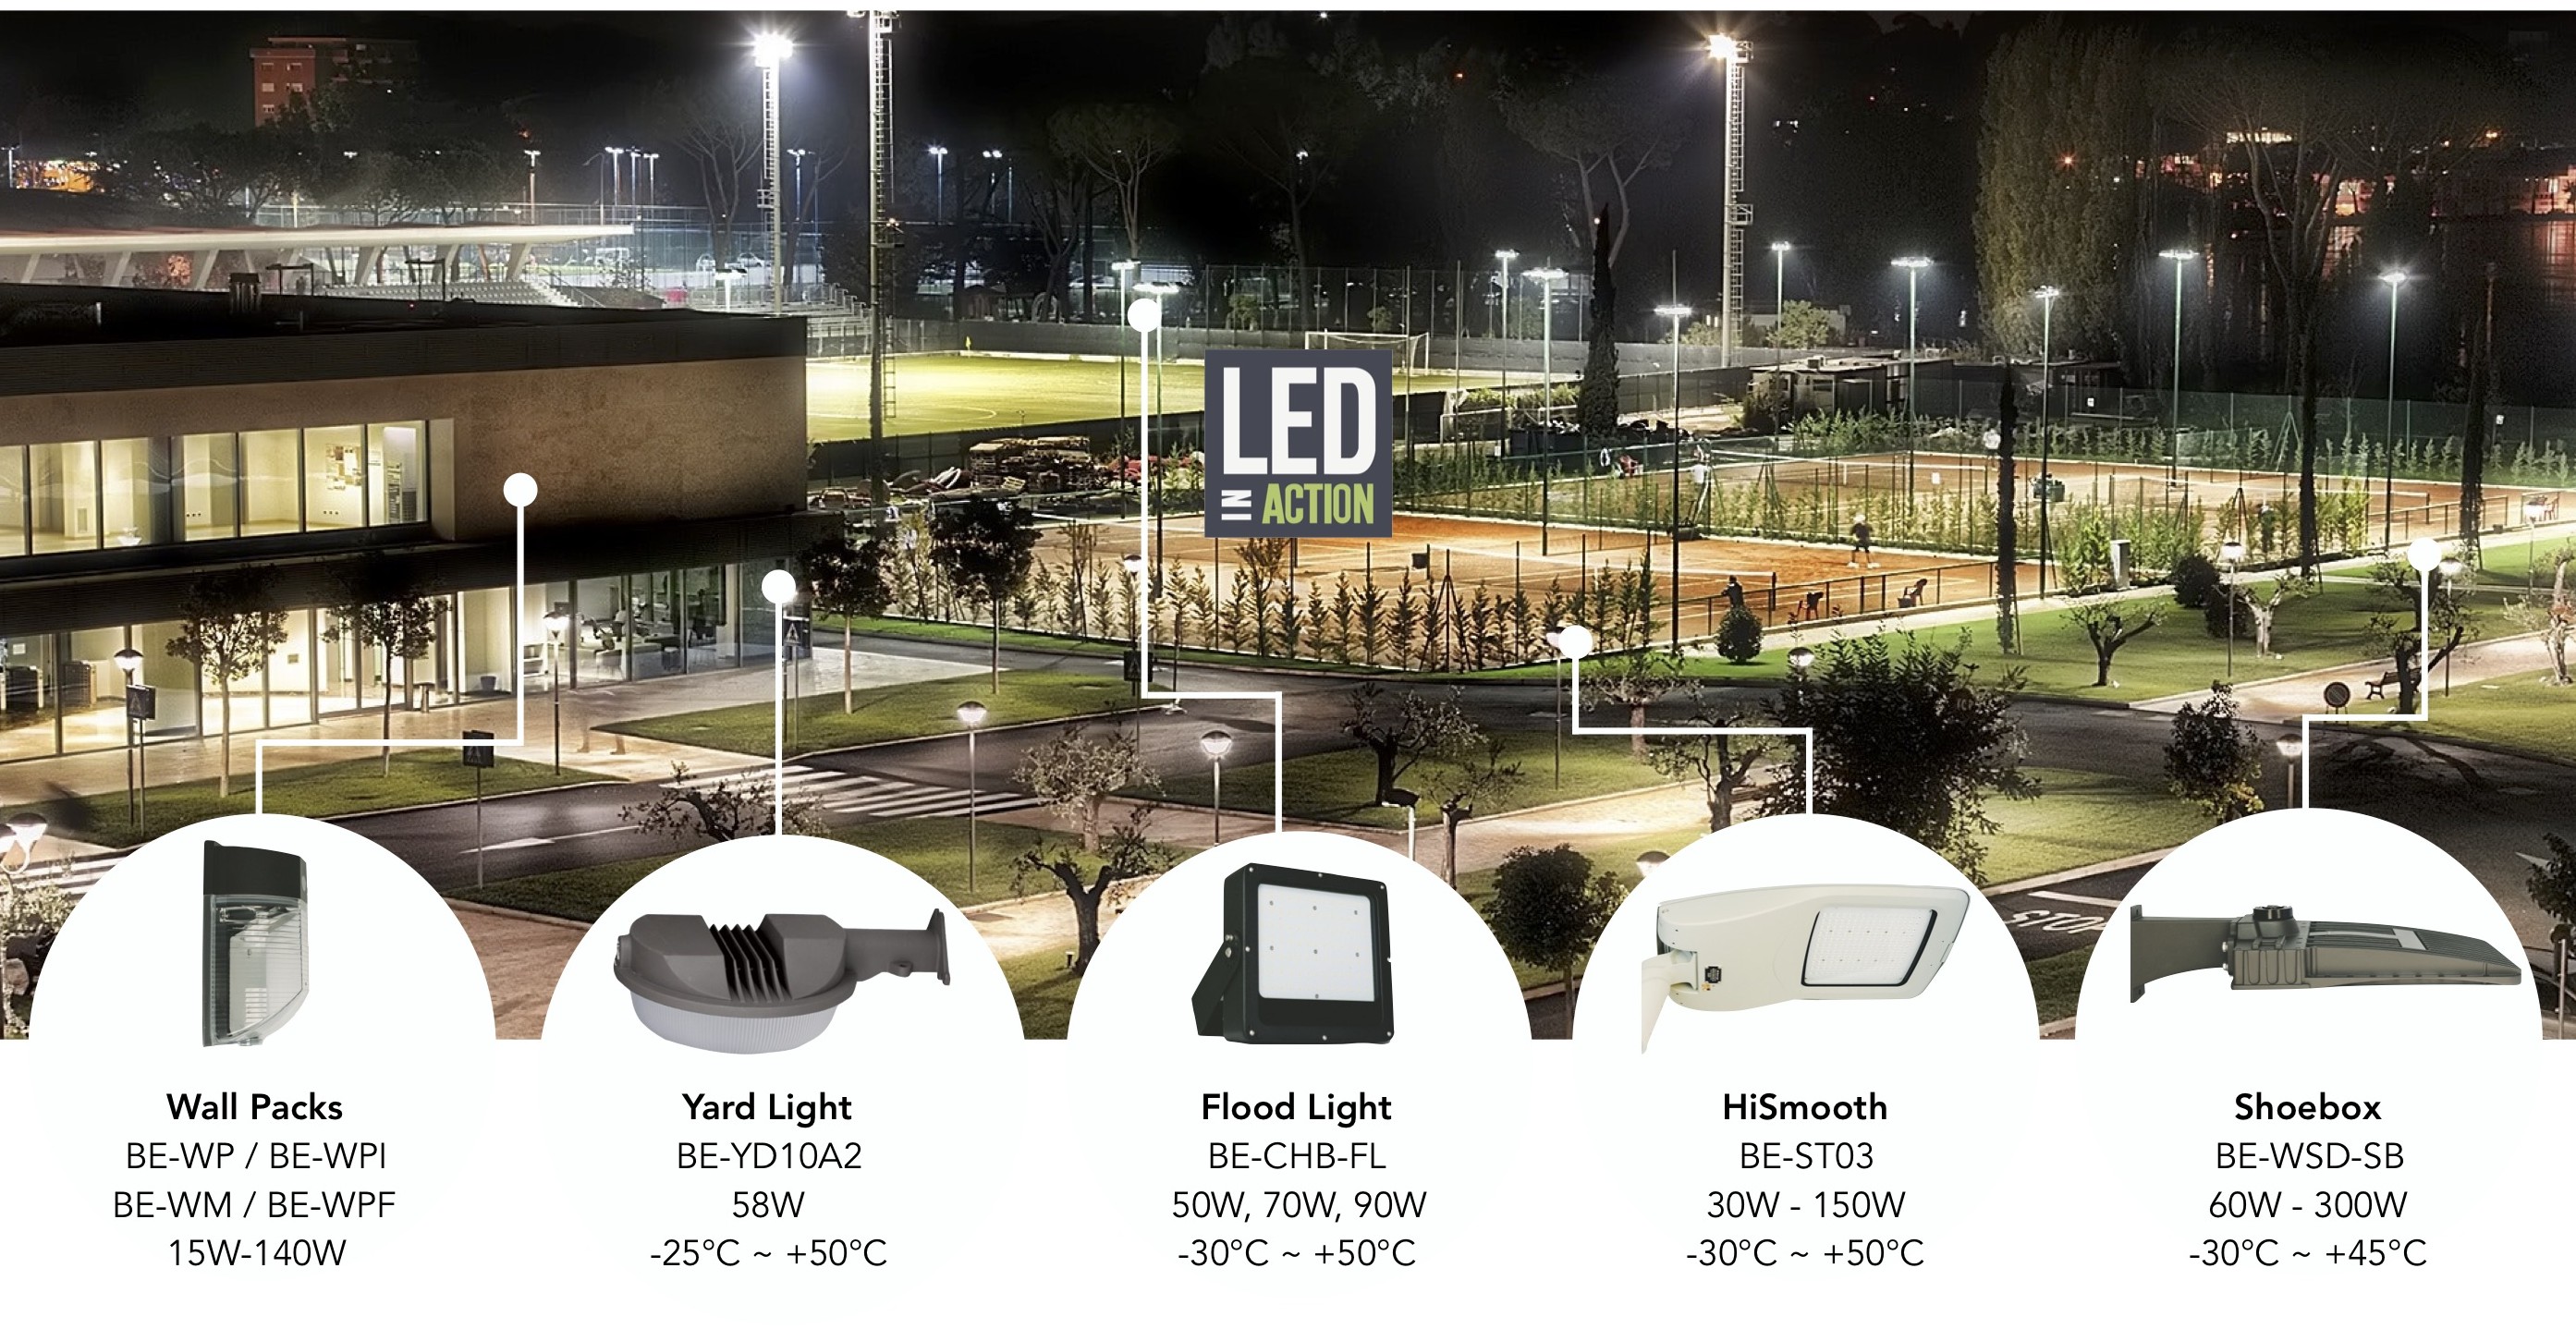 5 Outdoor LED Lights for Dark Winter Months